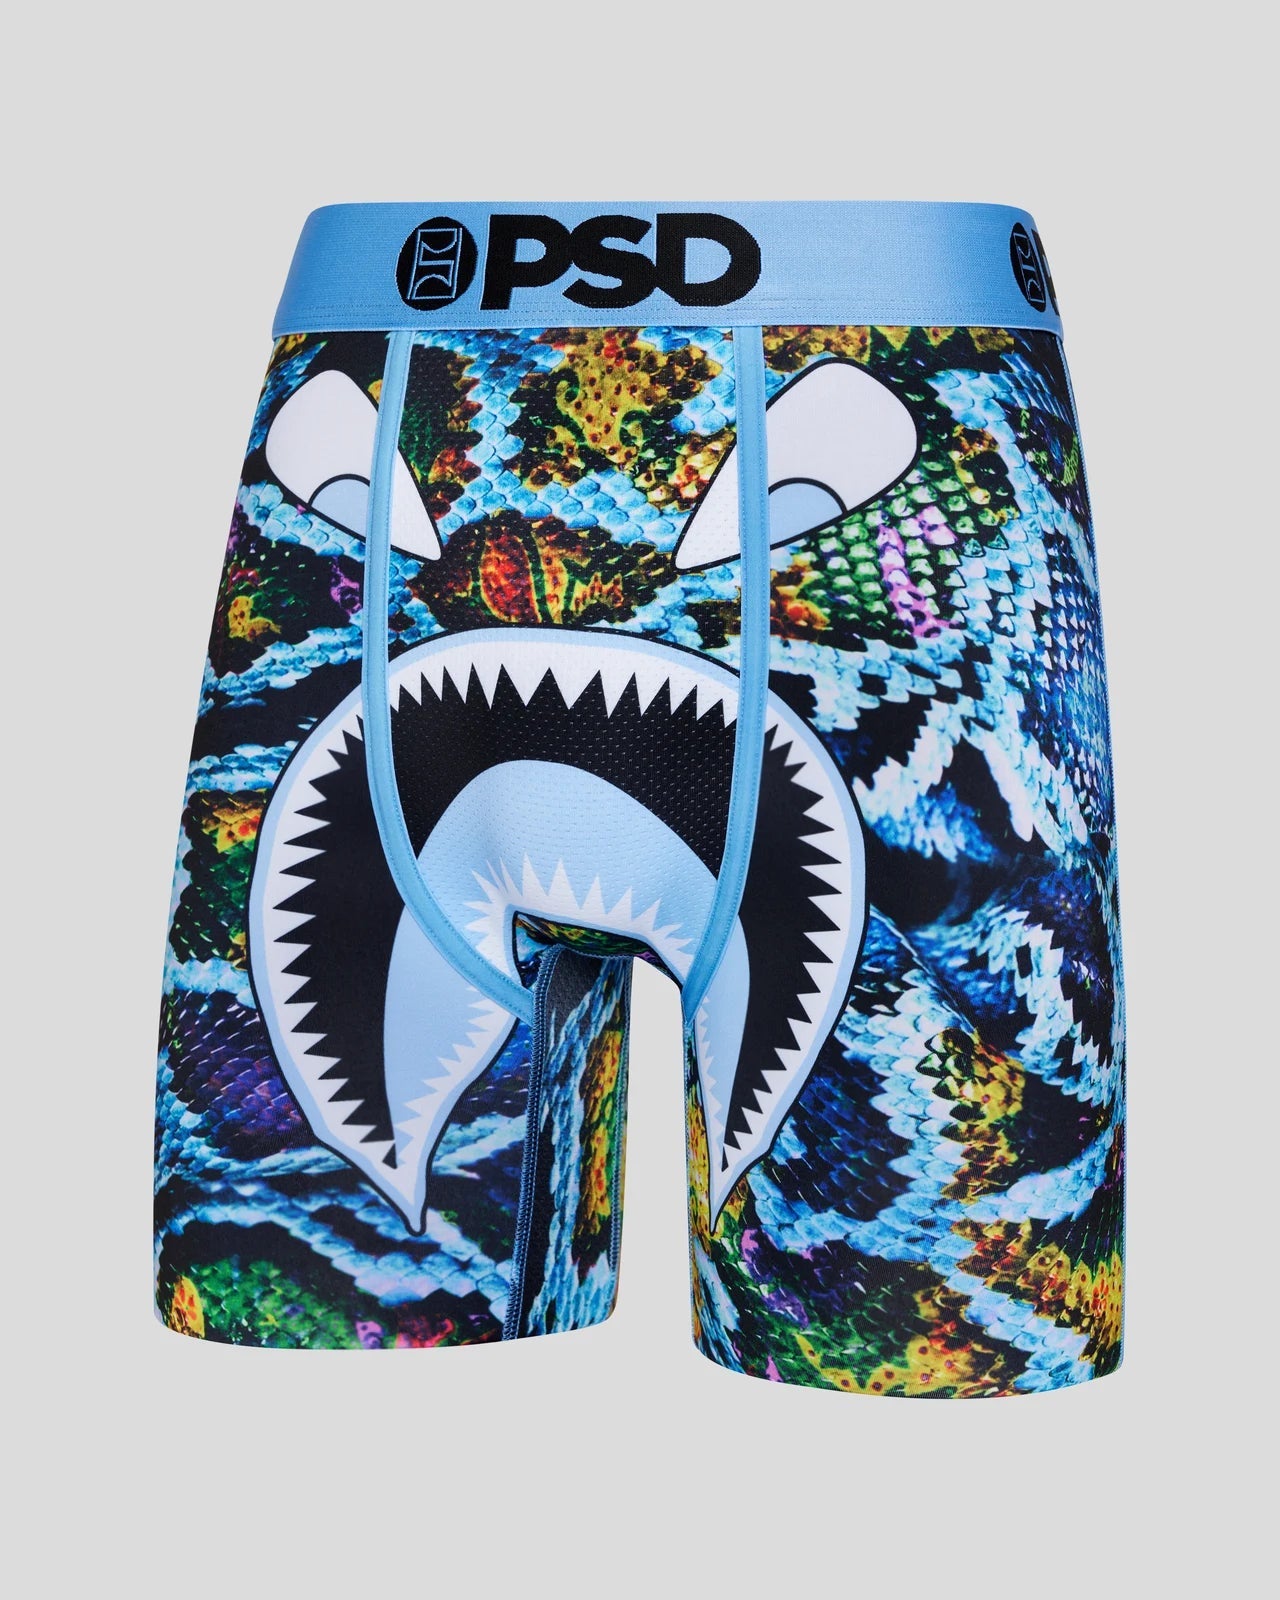  PSD Boy's Wf Blue Dye Yth Boxer Briefs, Multi, S